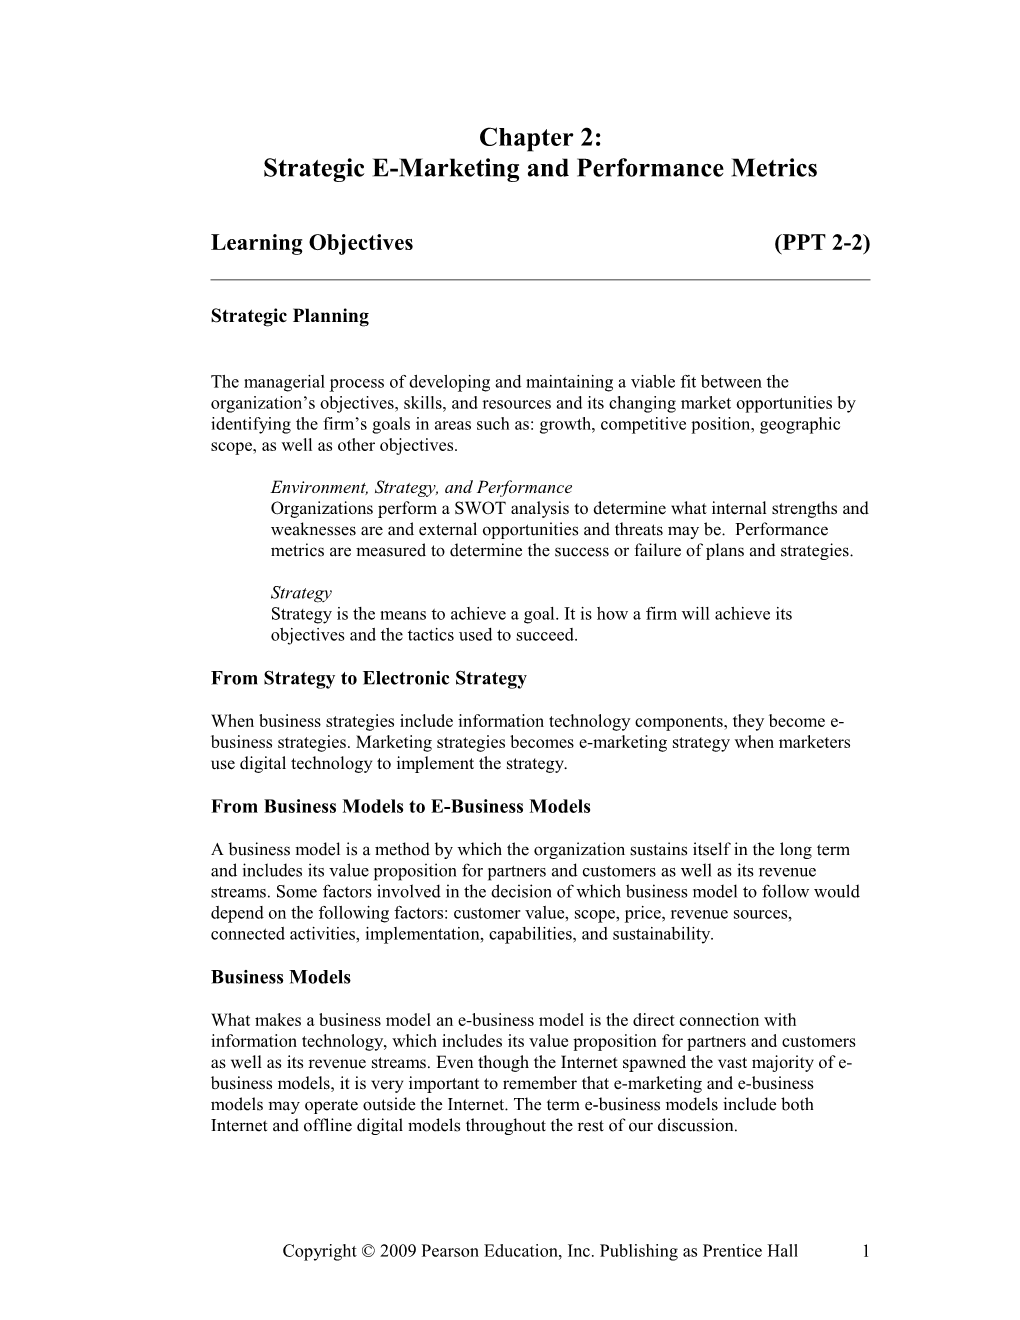 Strategic E-Marketing and Performance Metrics